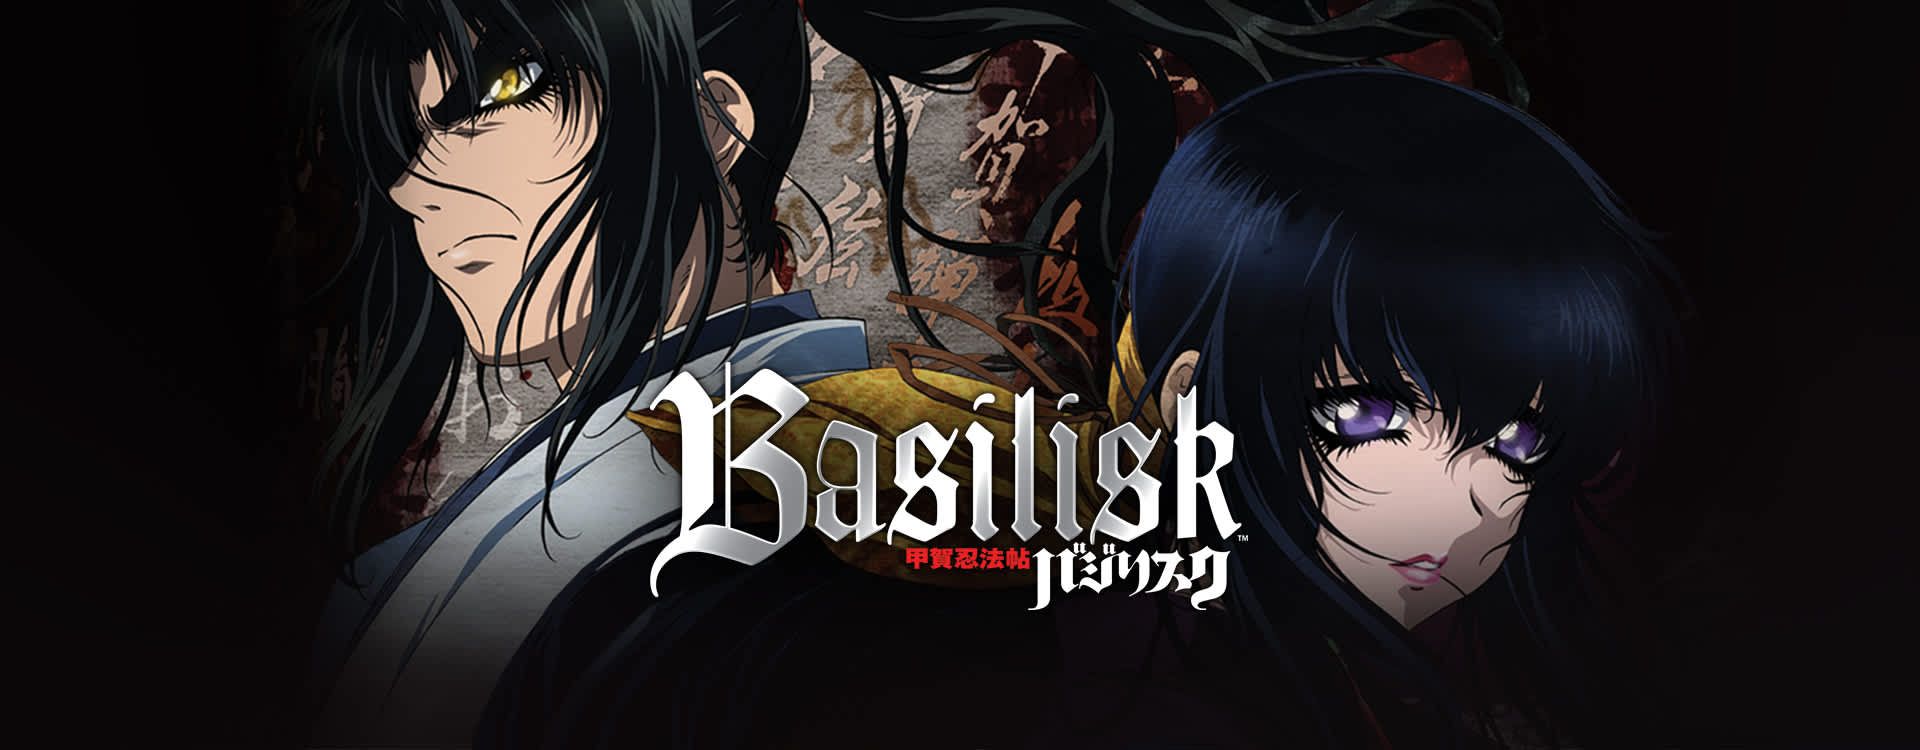 Watch Basilisk Episodes Sub & Dub. Action Adventure, Fantasy